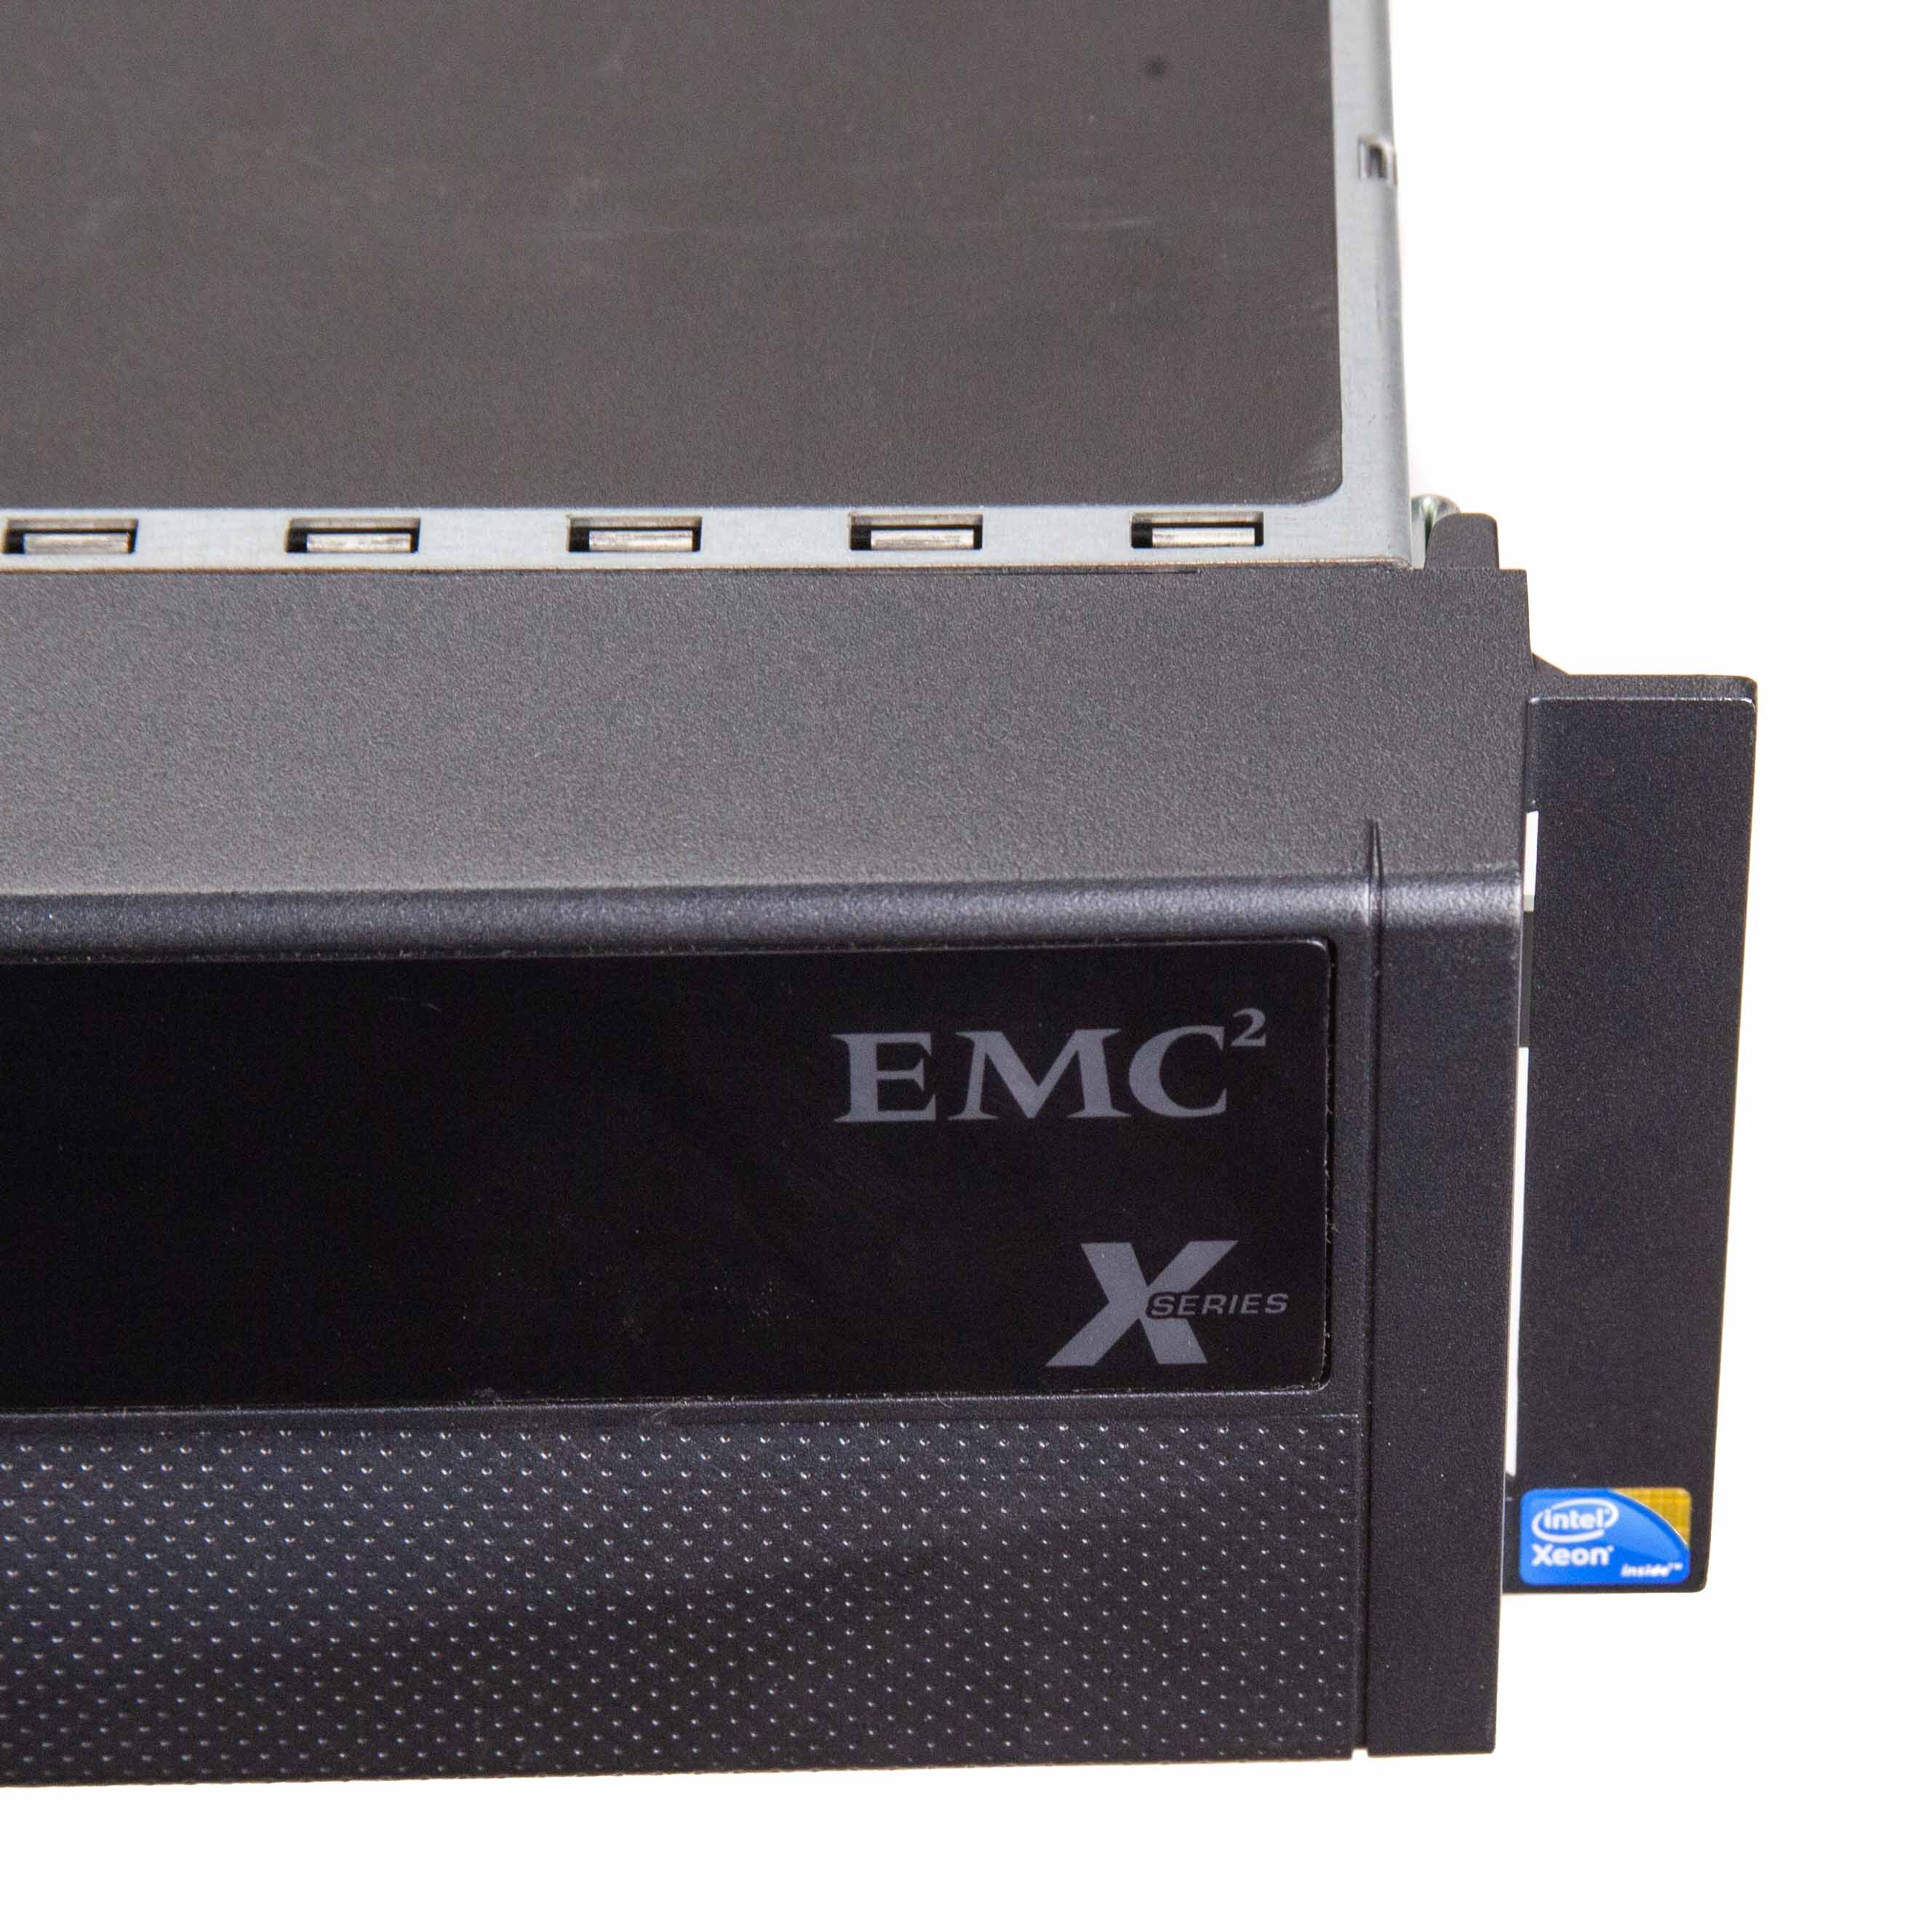 EMC Isilon X200 E5504 12GB DDR3 Dual 760W PSU 2U 12 Bay NAS Storage System  NODE - Central Valley Computer Parts